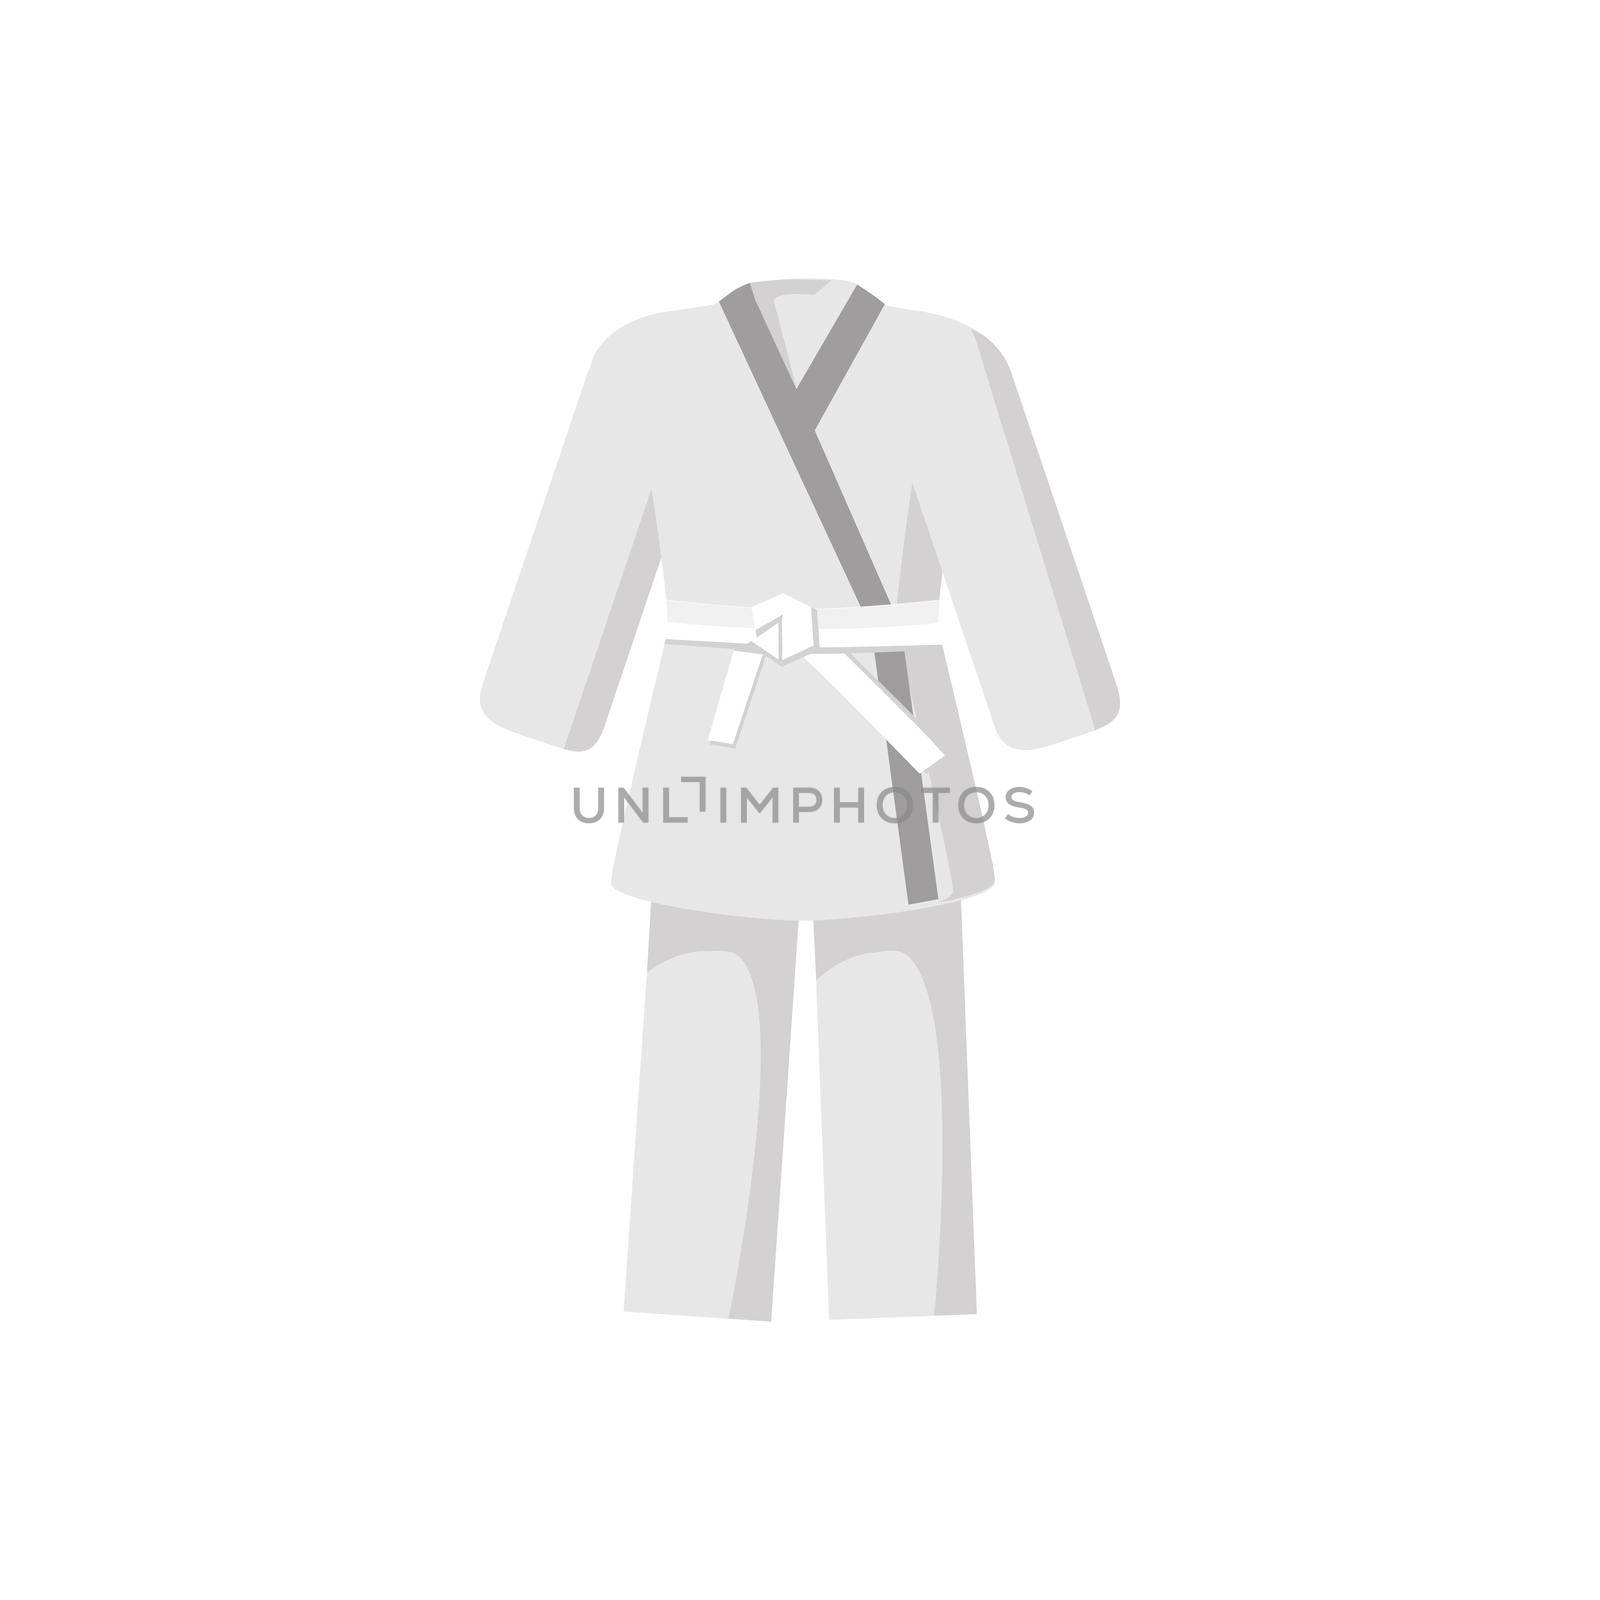 Kimono with martial arts white belt icon by ylivdesign